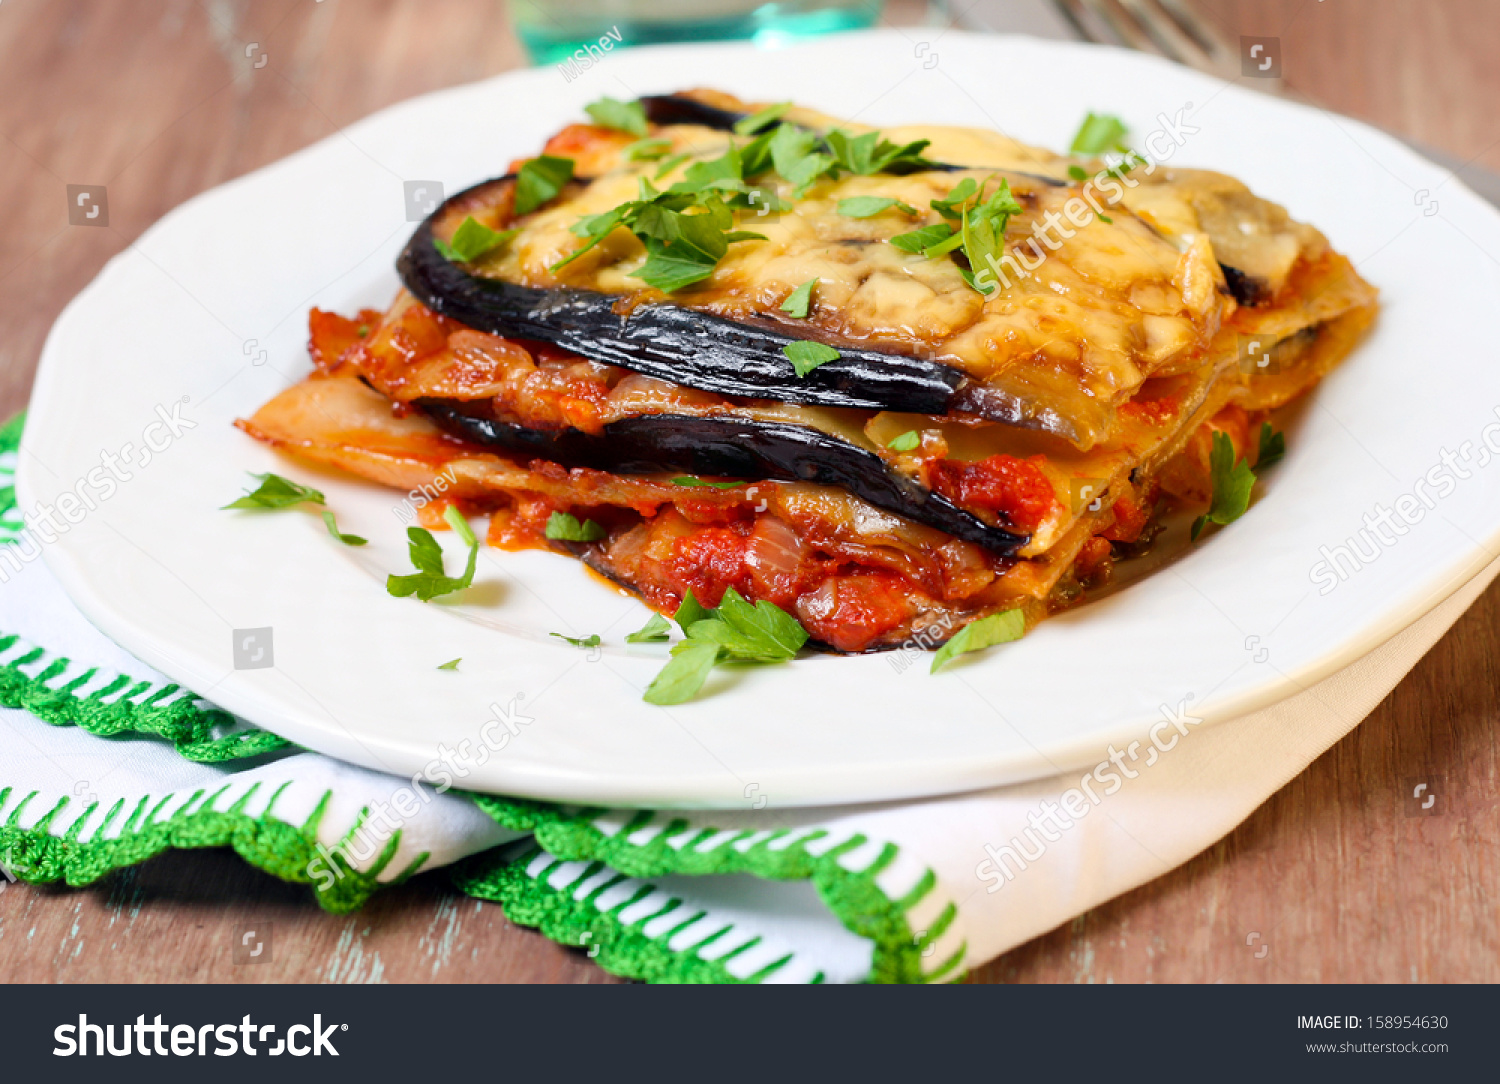 Piece of vegetable lasagna #158954630